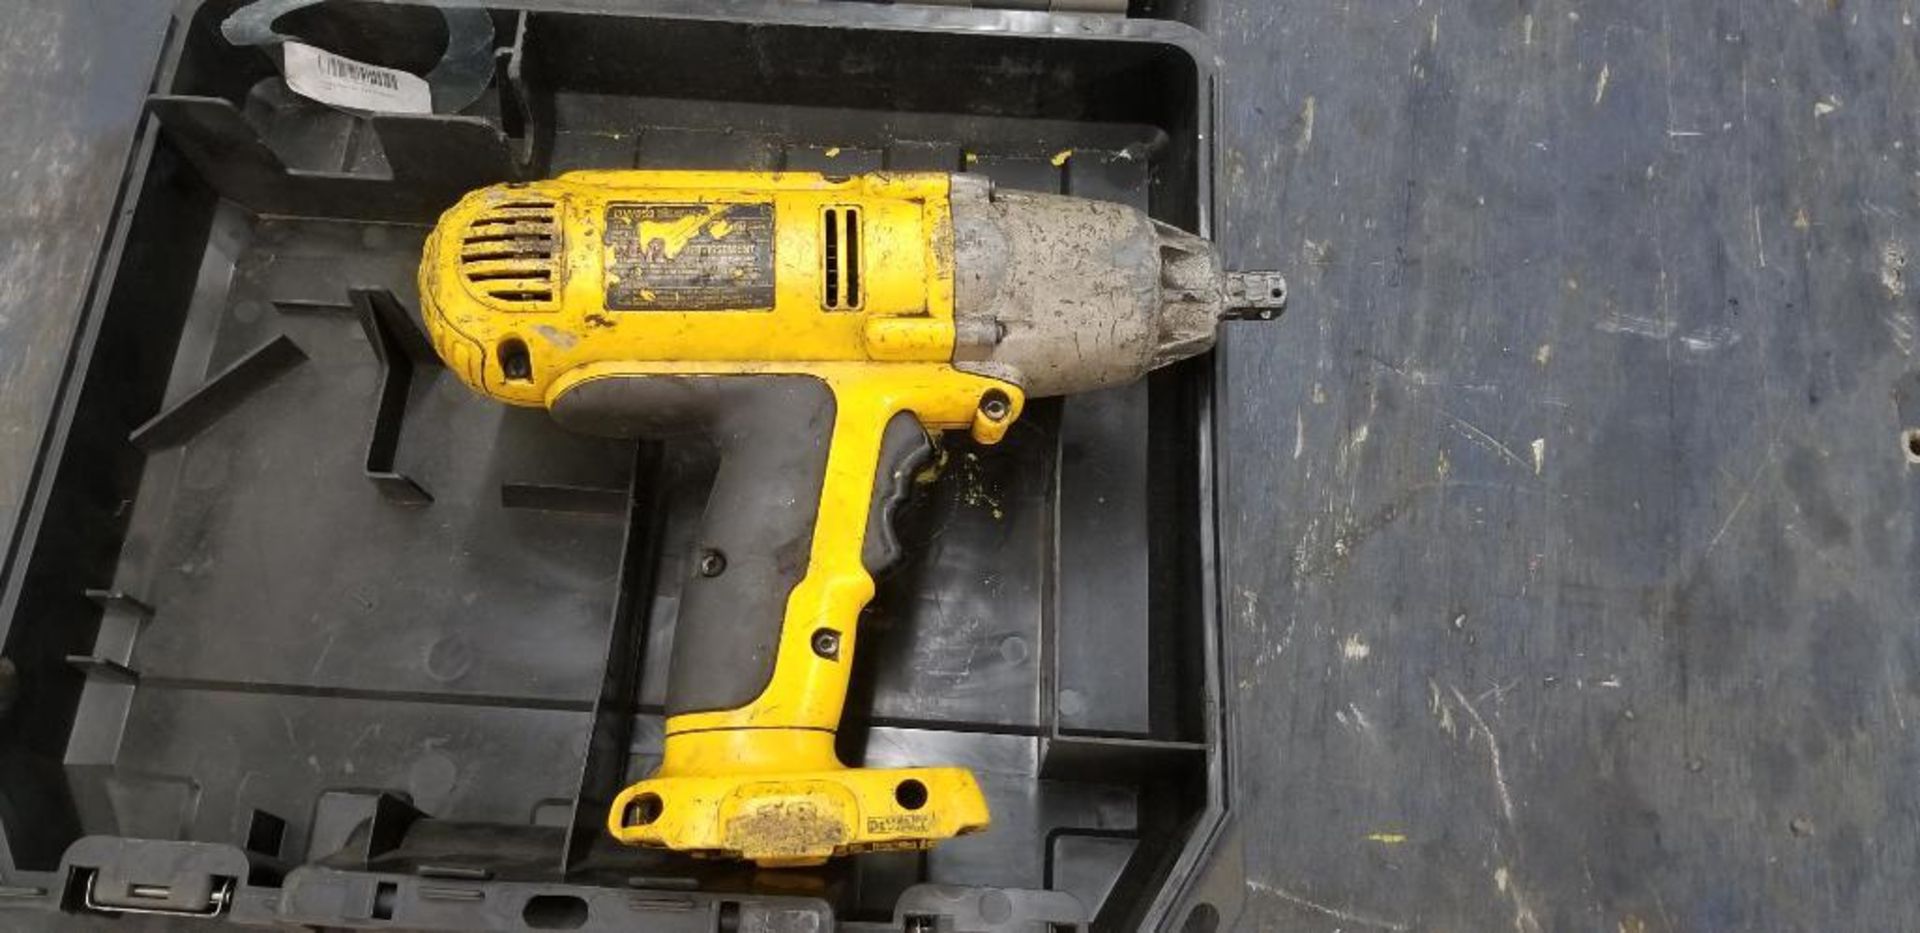 DeWalt 18v Cordless 1/2" Impact Wrench, w/ Case - Image 2 of 4